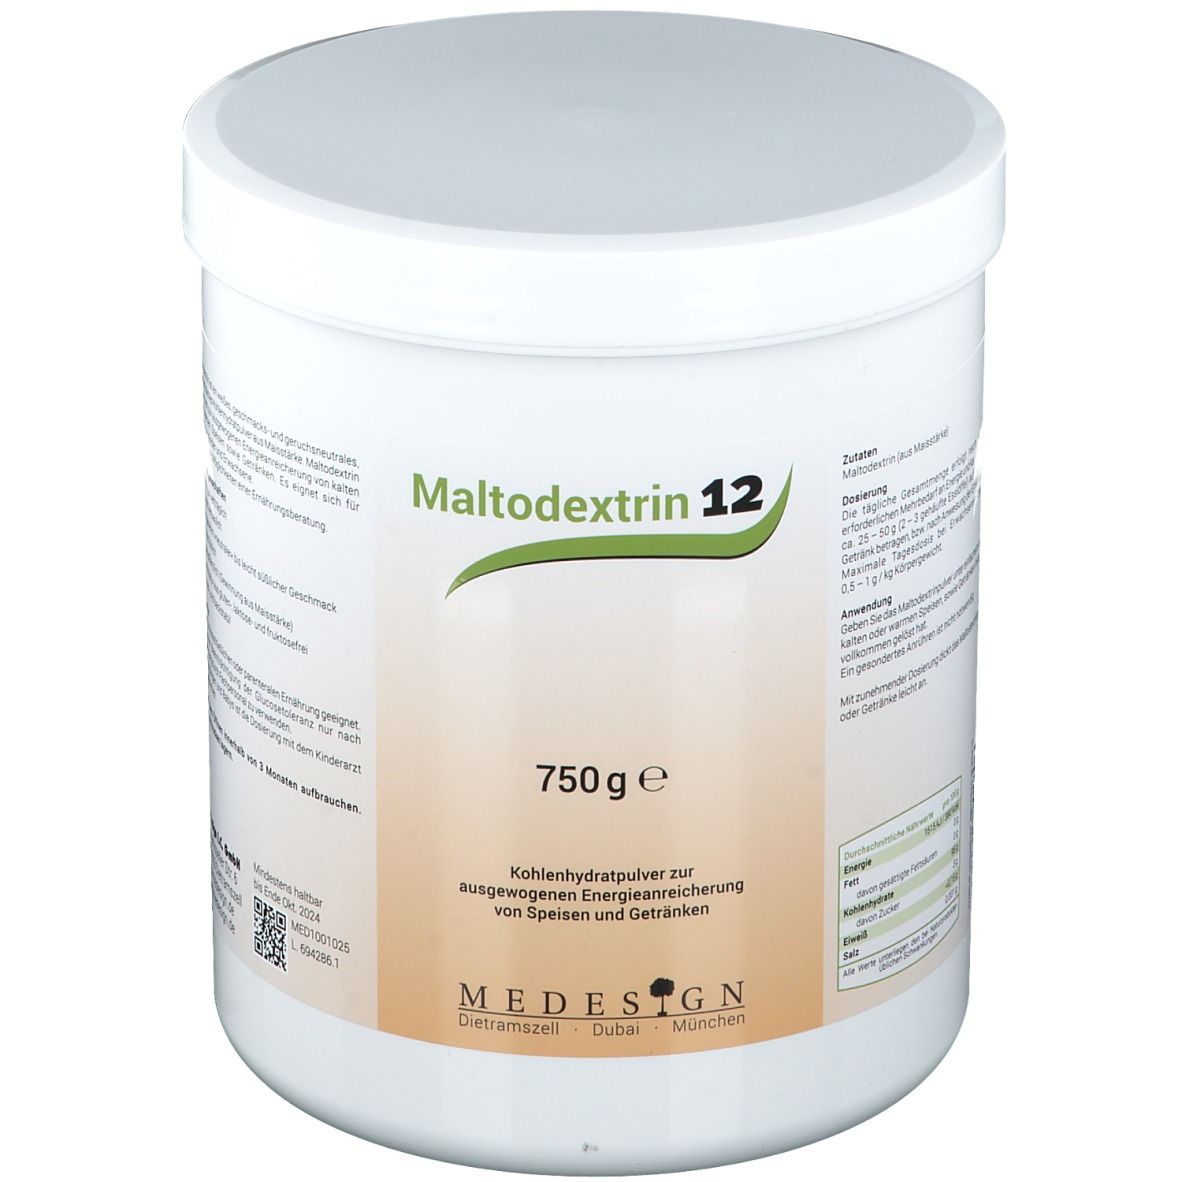 Maltodextrin 12